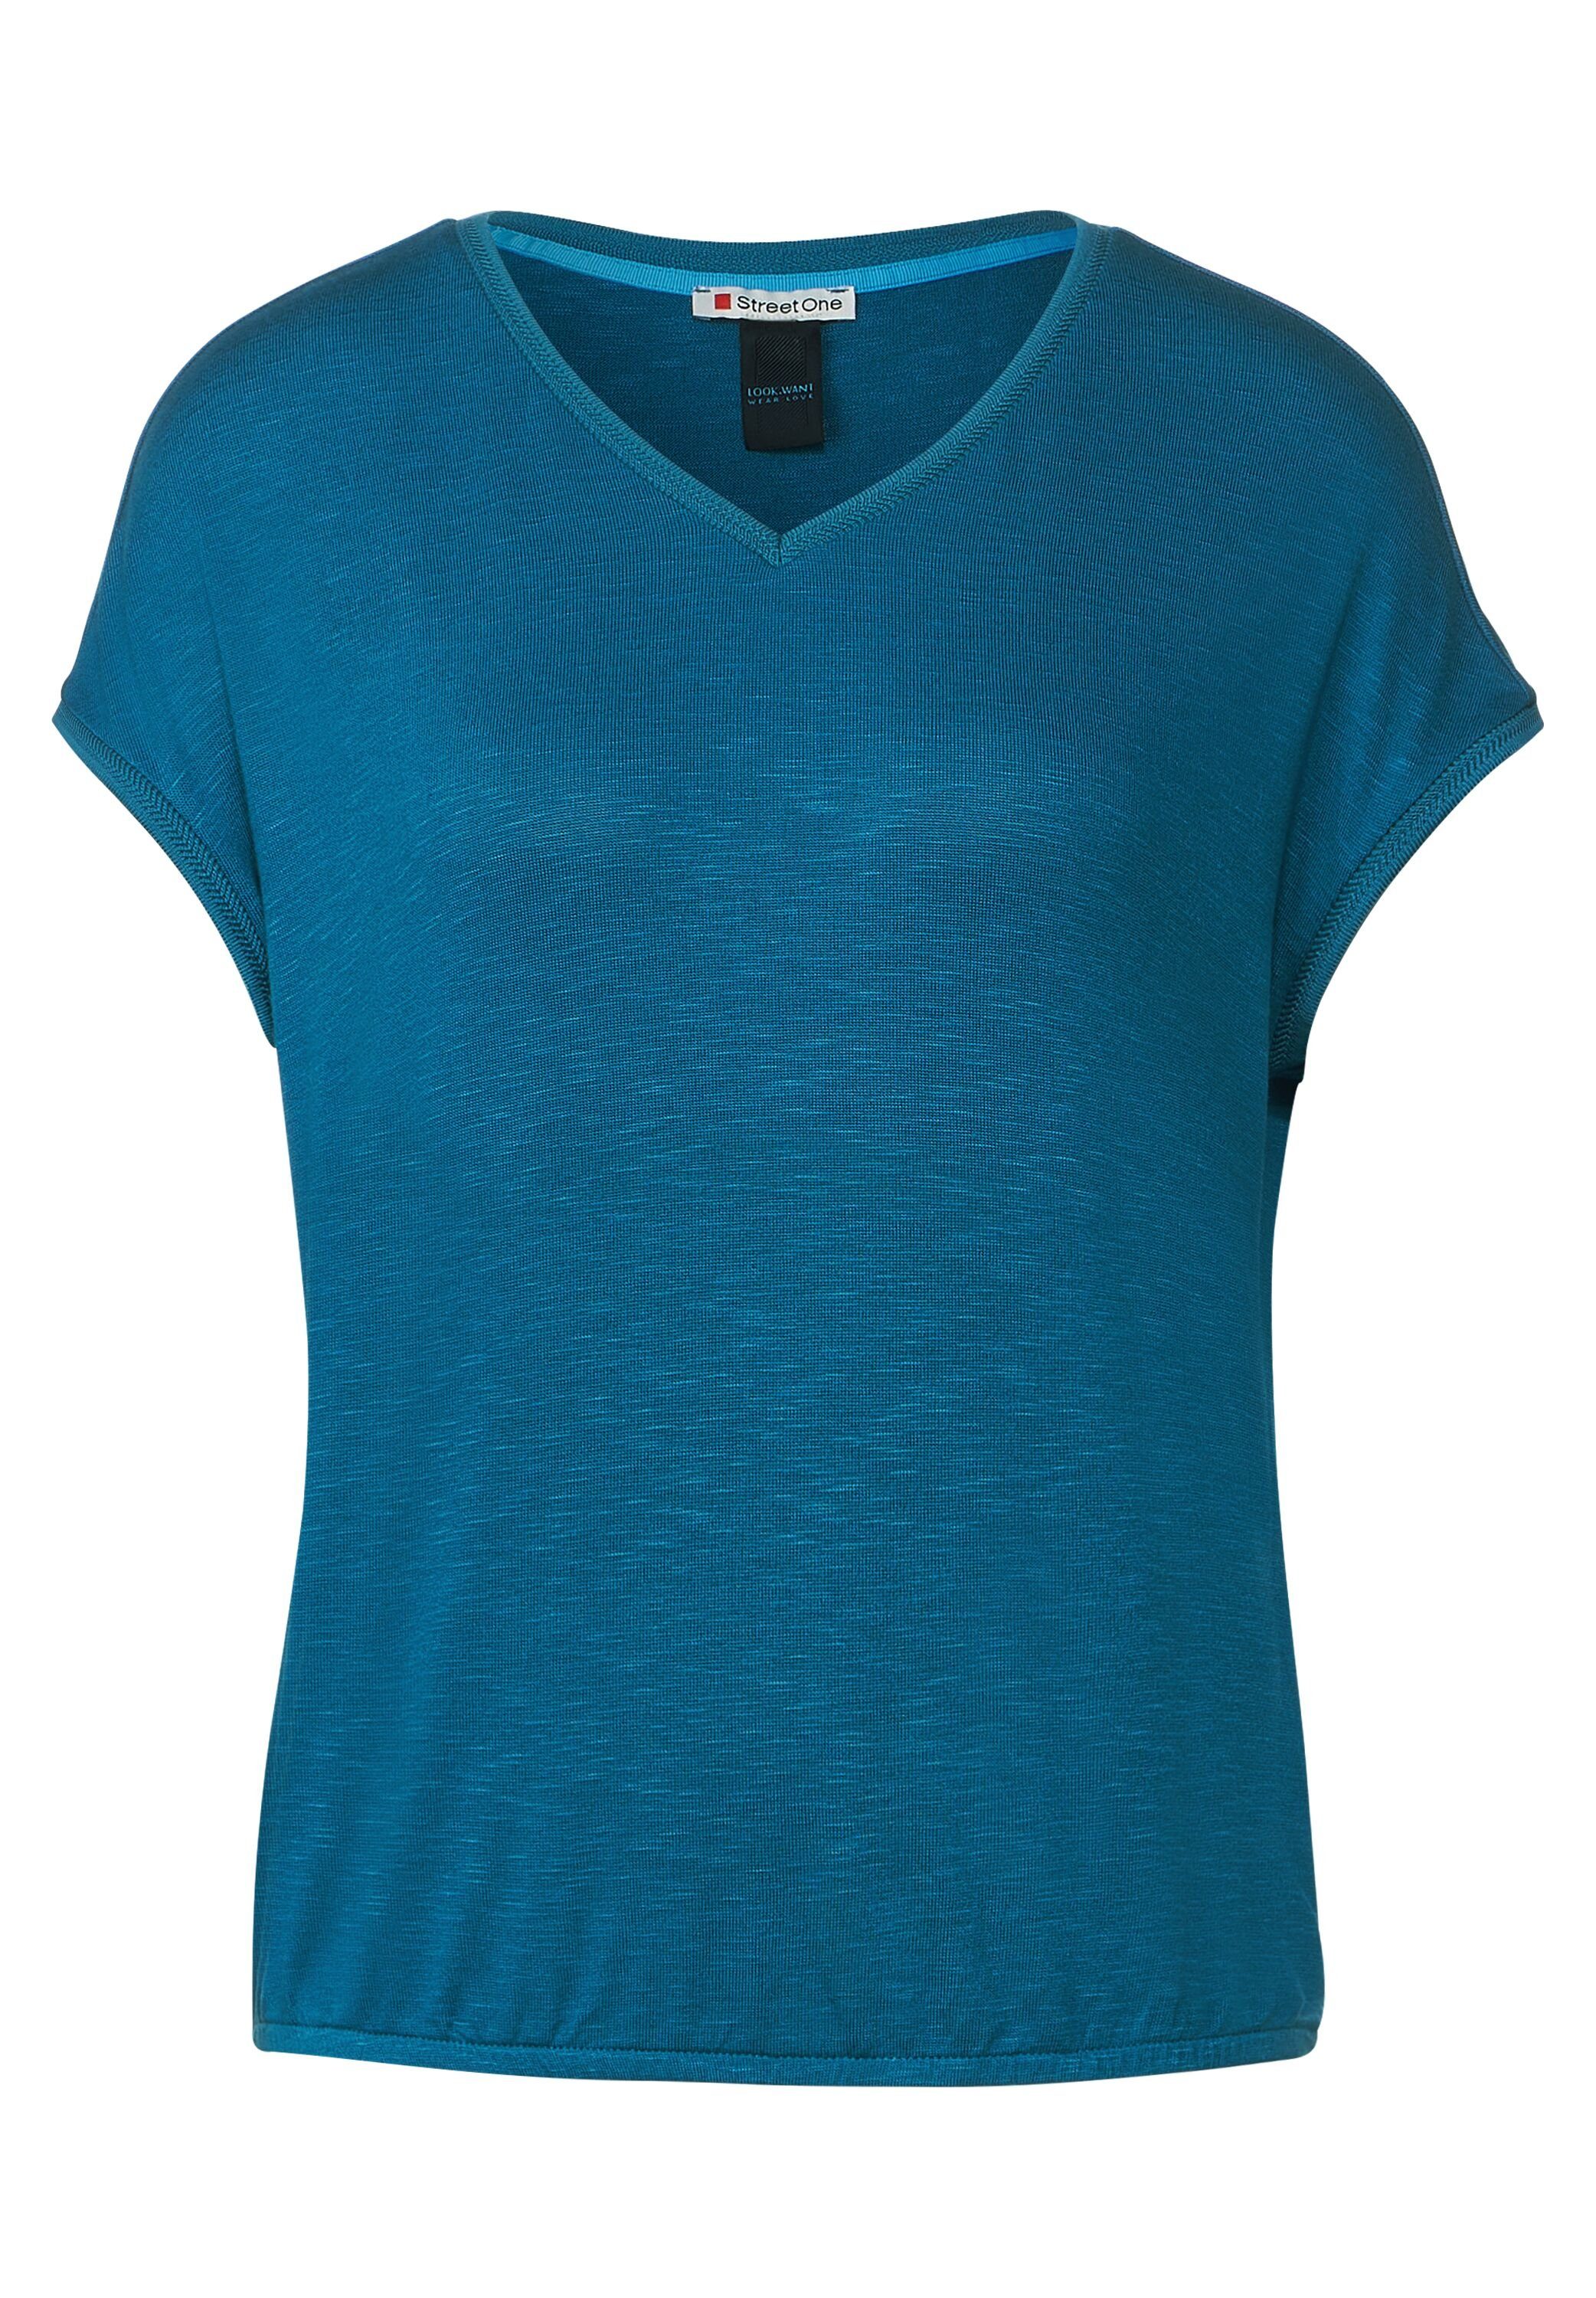 Unifarbe deep blue in ONE STREET T-Shirt